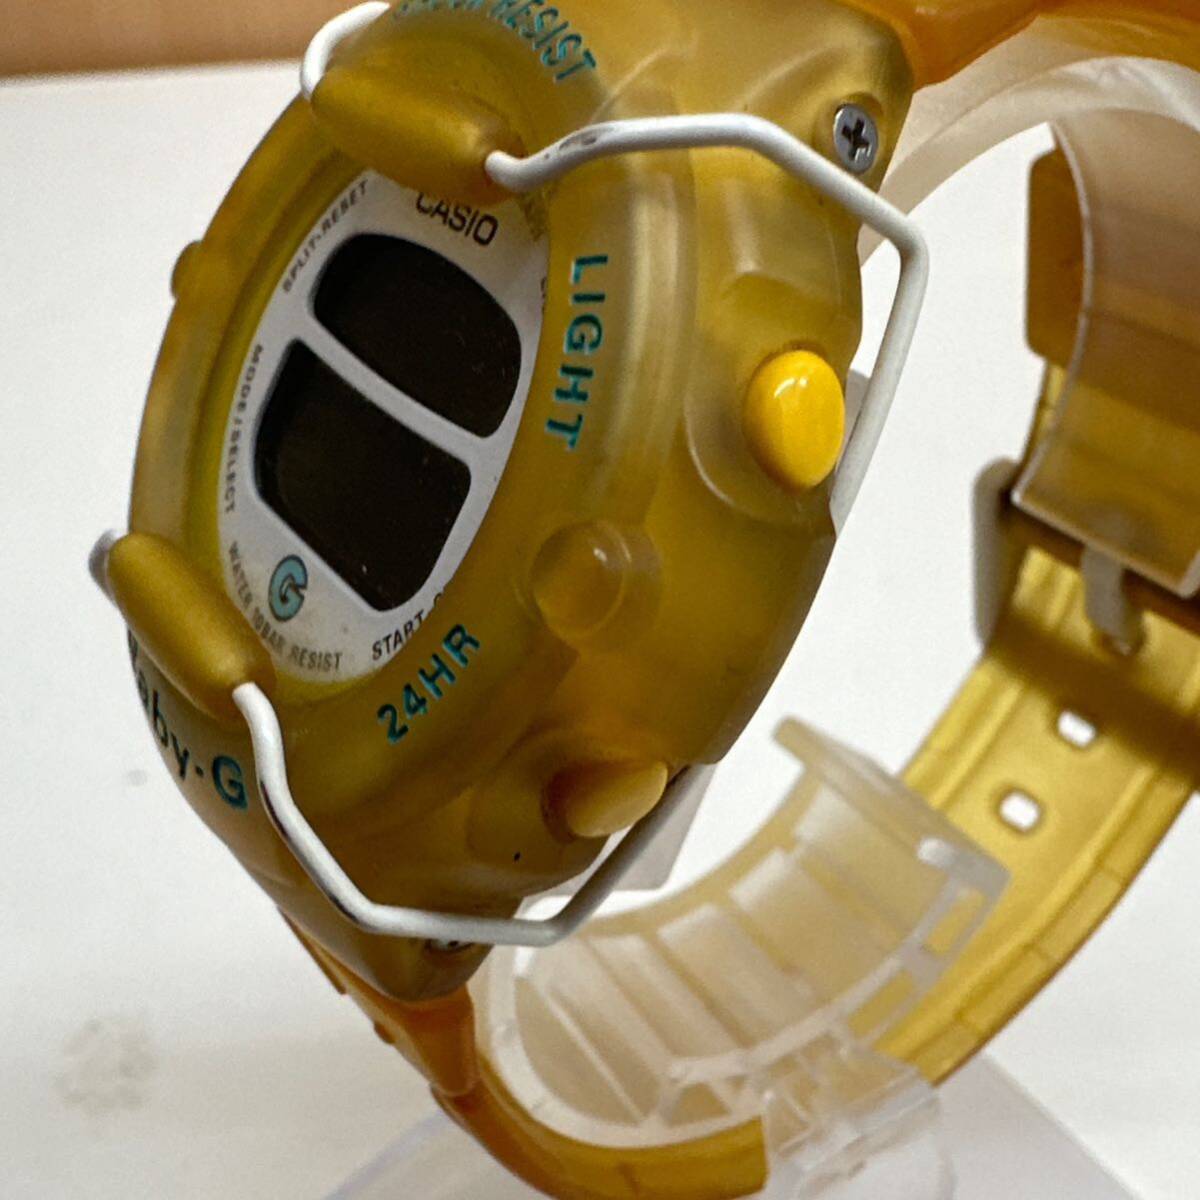 【TM0403】CASIO カシオ Baby-G BG-200 デジタル 腕時計 メンズ レディース ファッション小物 服飾小物 レトロ アンティーク コレクションの画像3